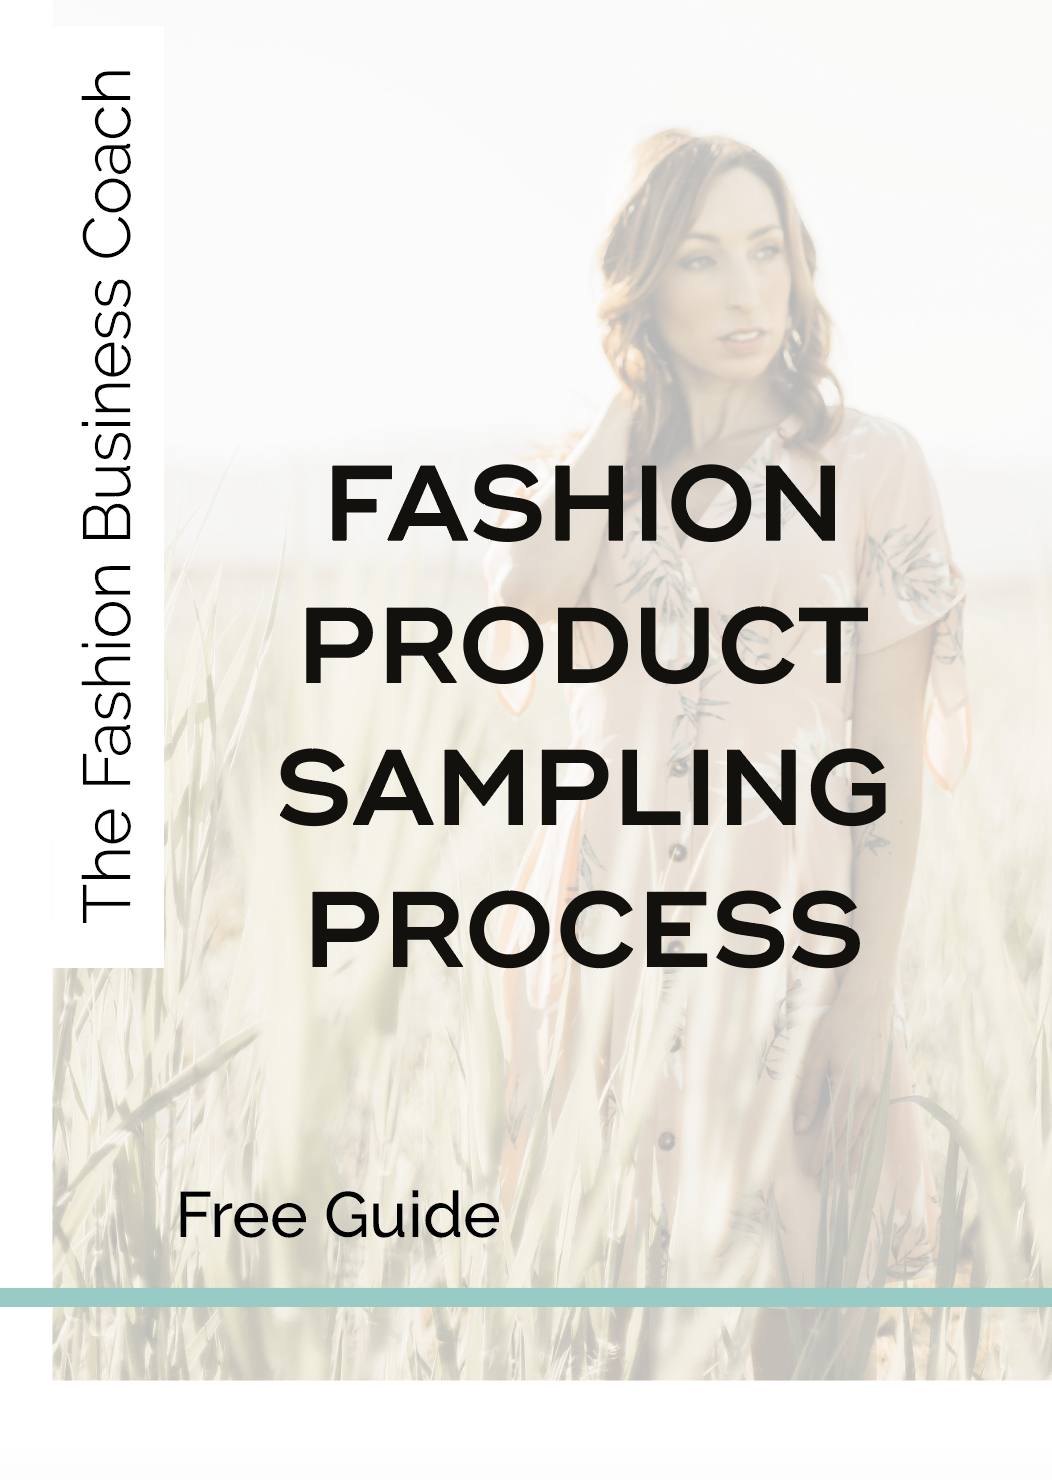 Fashion Product Sampling Process 1.png